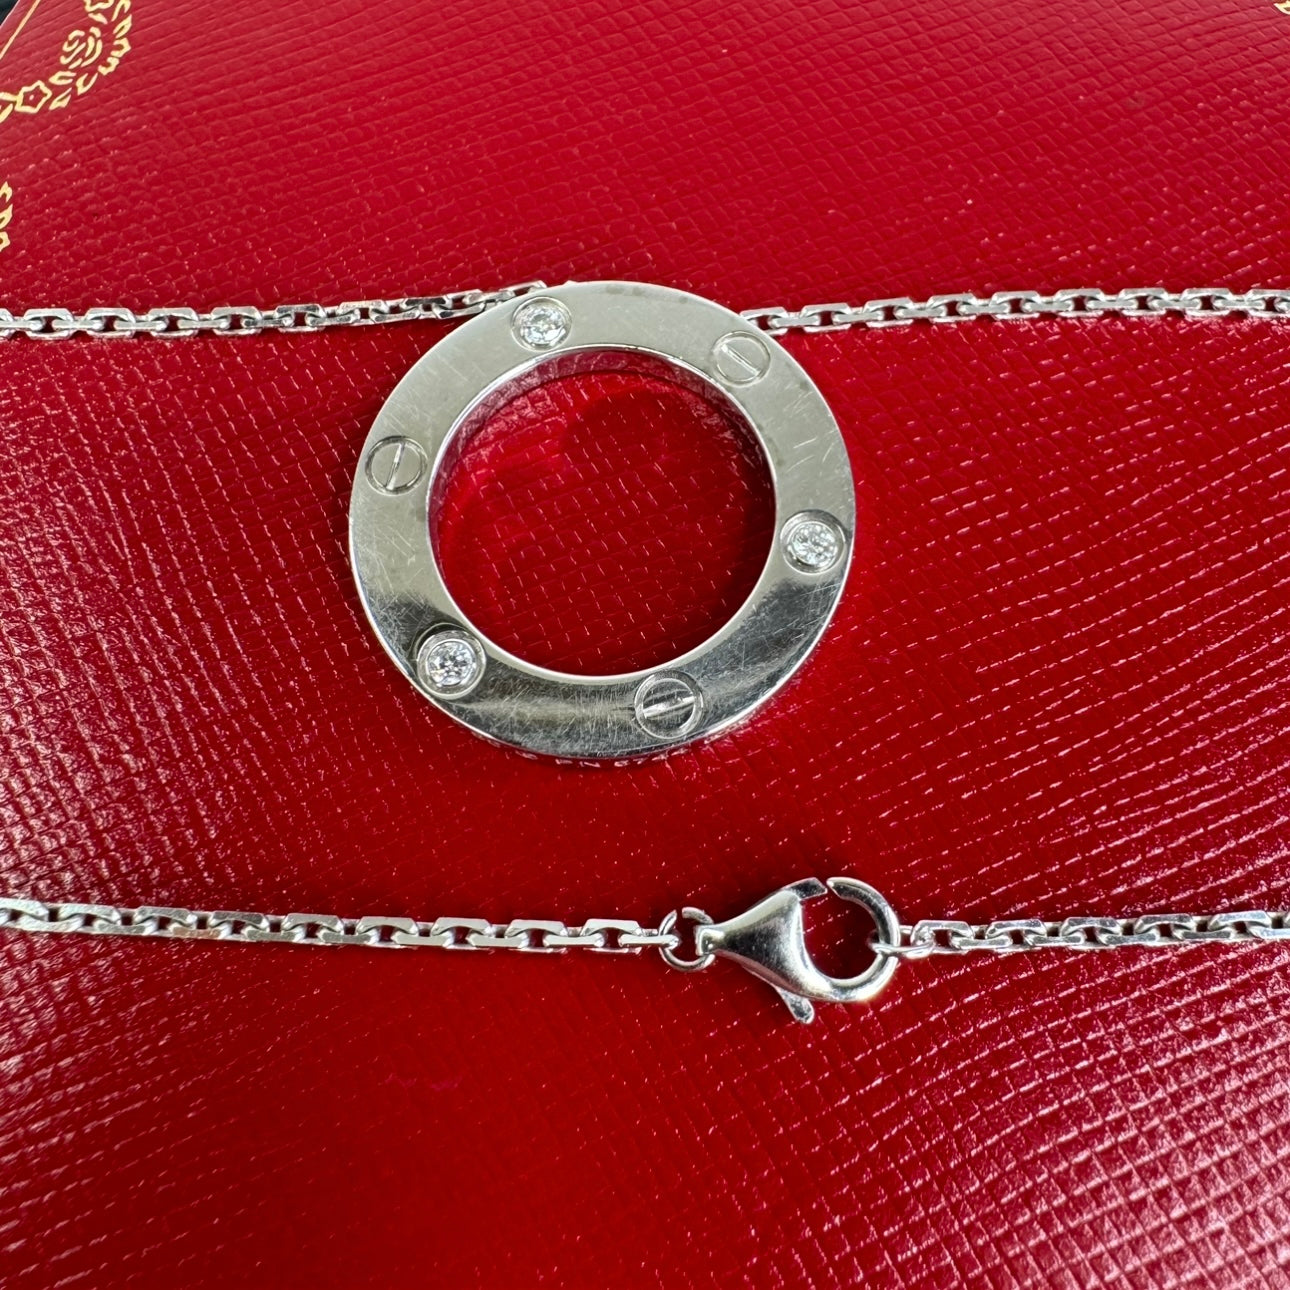 Cartier "Love" Circle Slider 18K White Gold Necklace